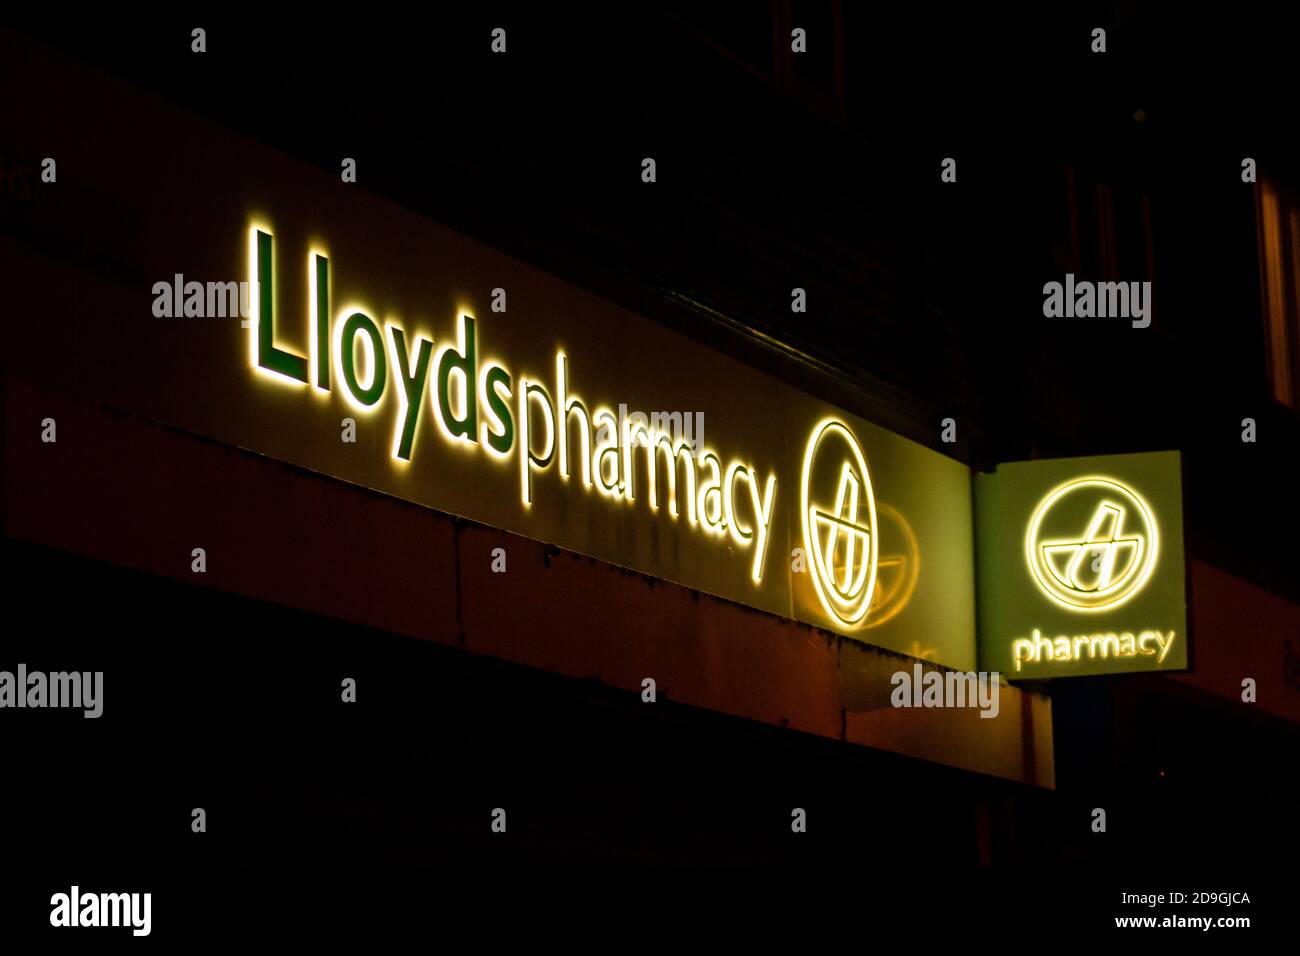 Lloyds Pharmacy (Chemist) sign at night, Birmingham, UK Stock Photo